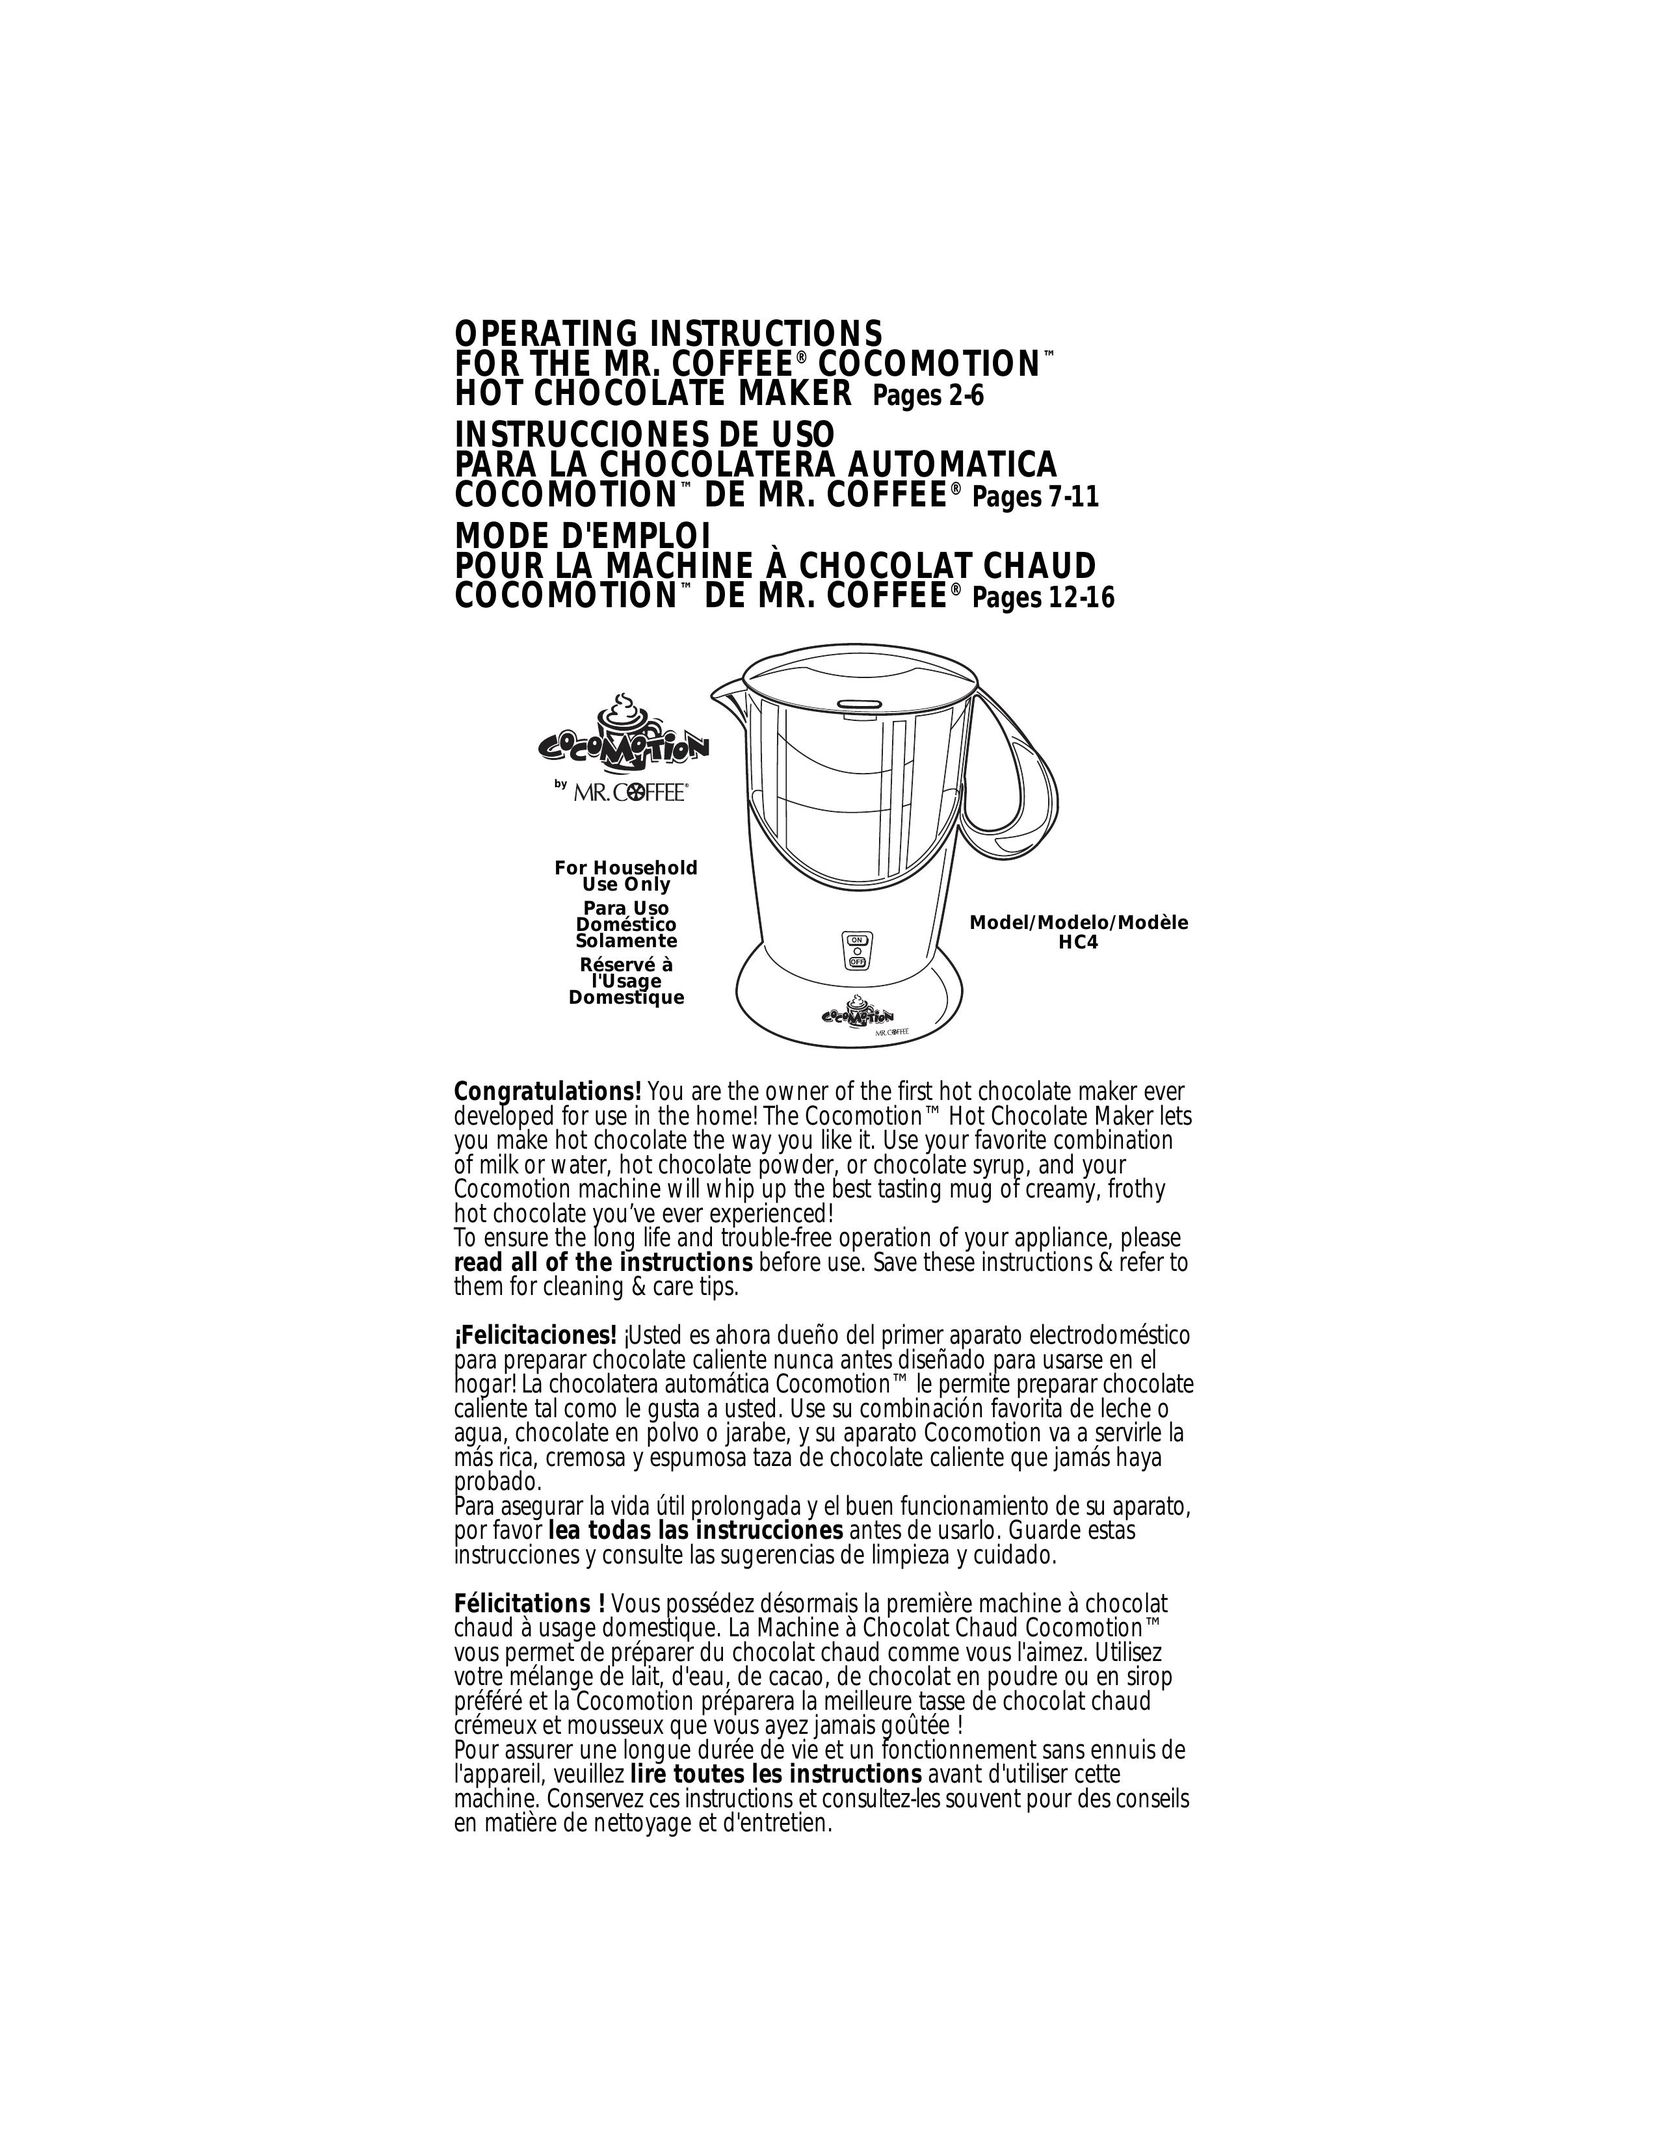 Mr. Coffee HC4 Hot Beverage Maker User Manual